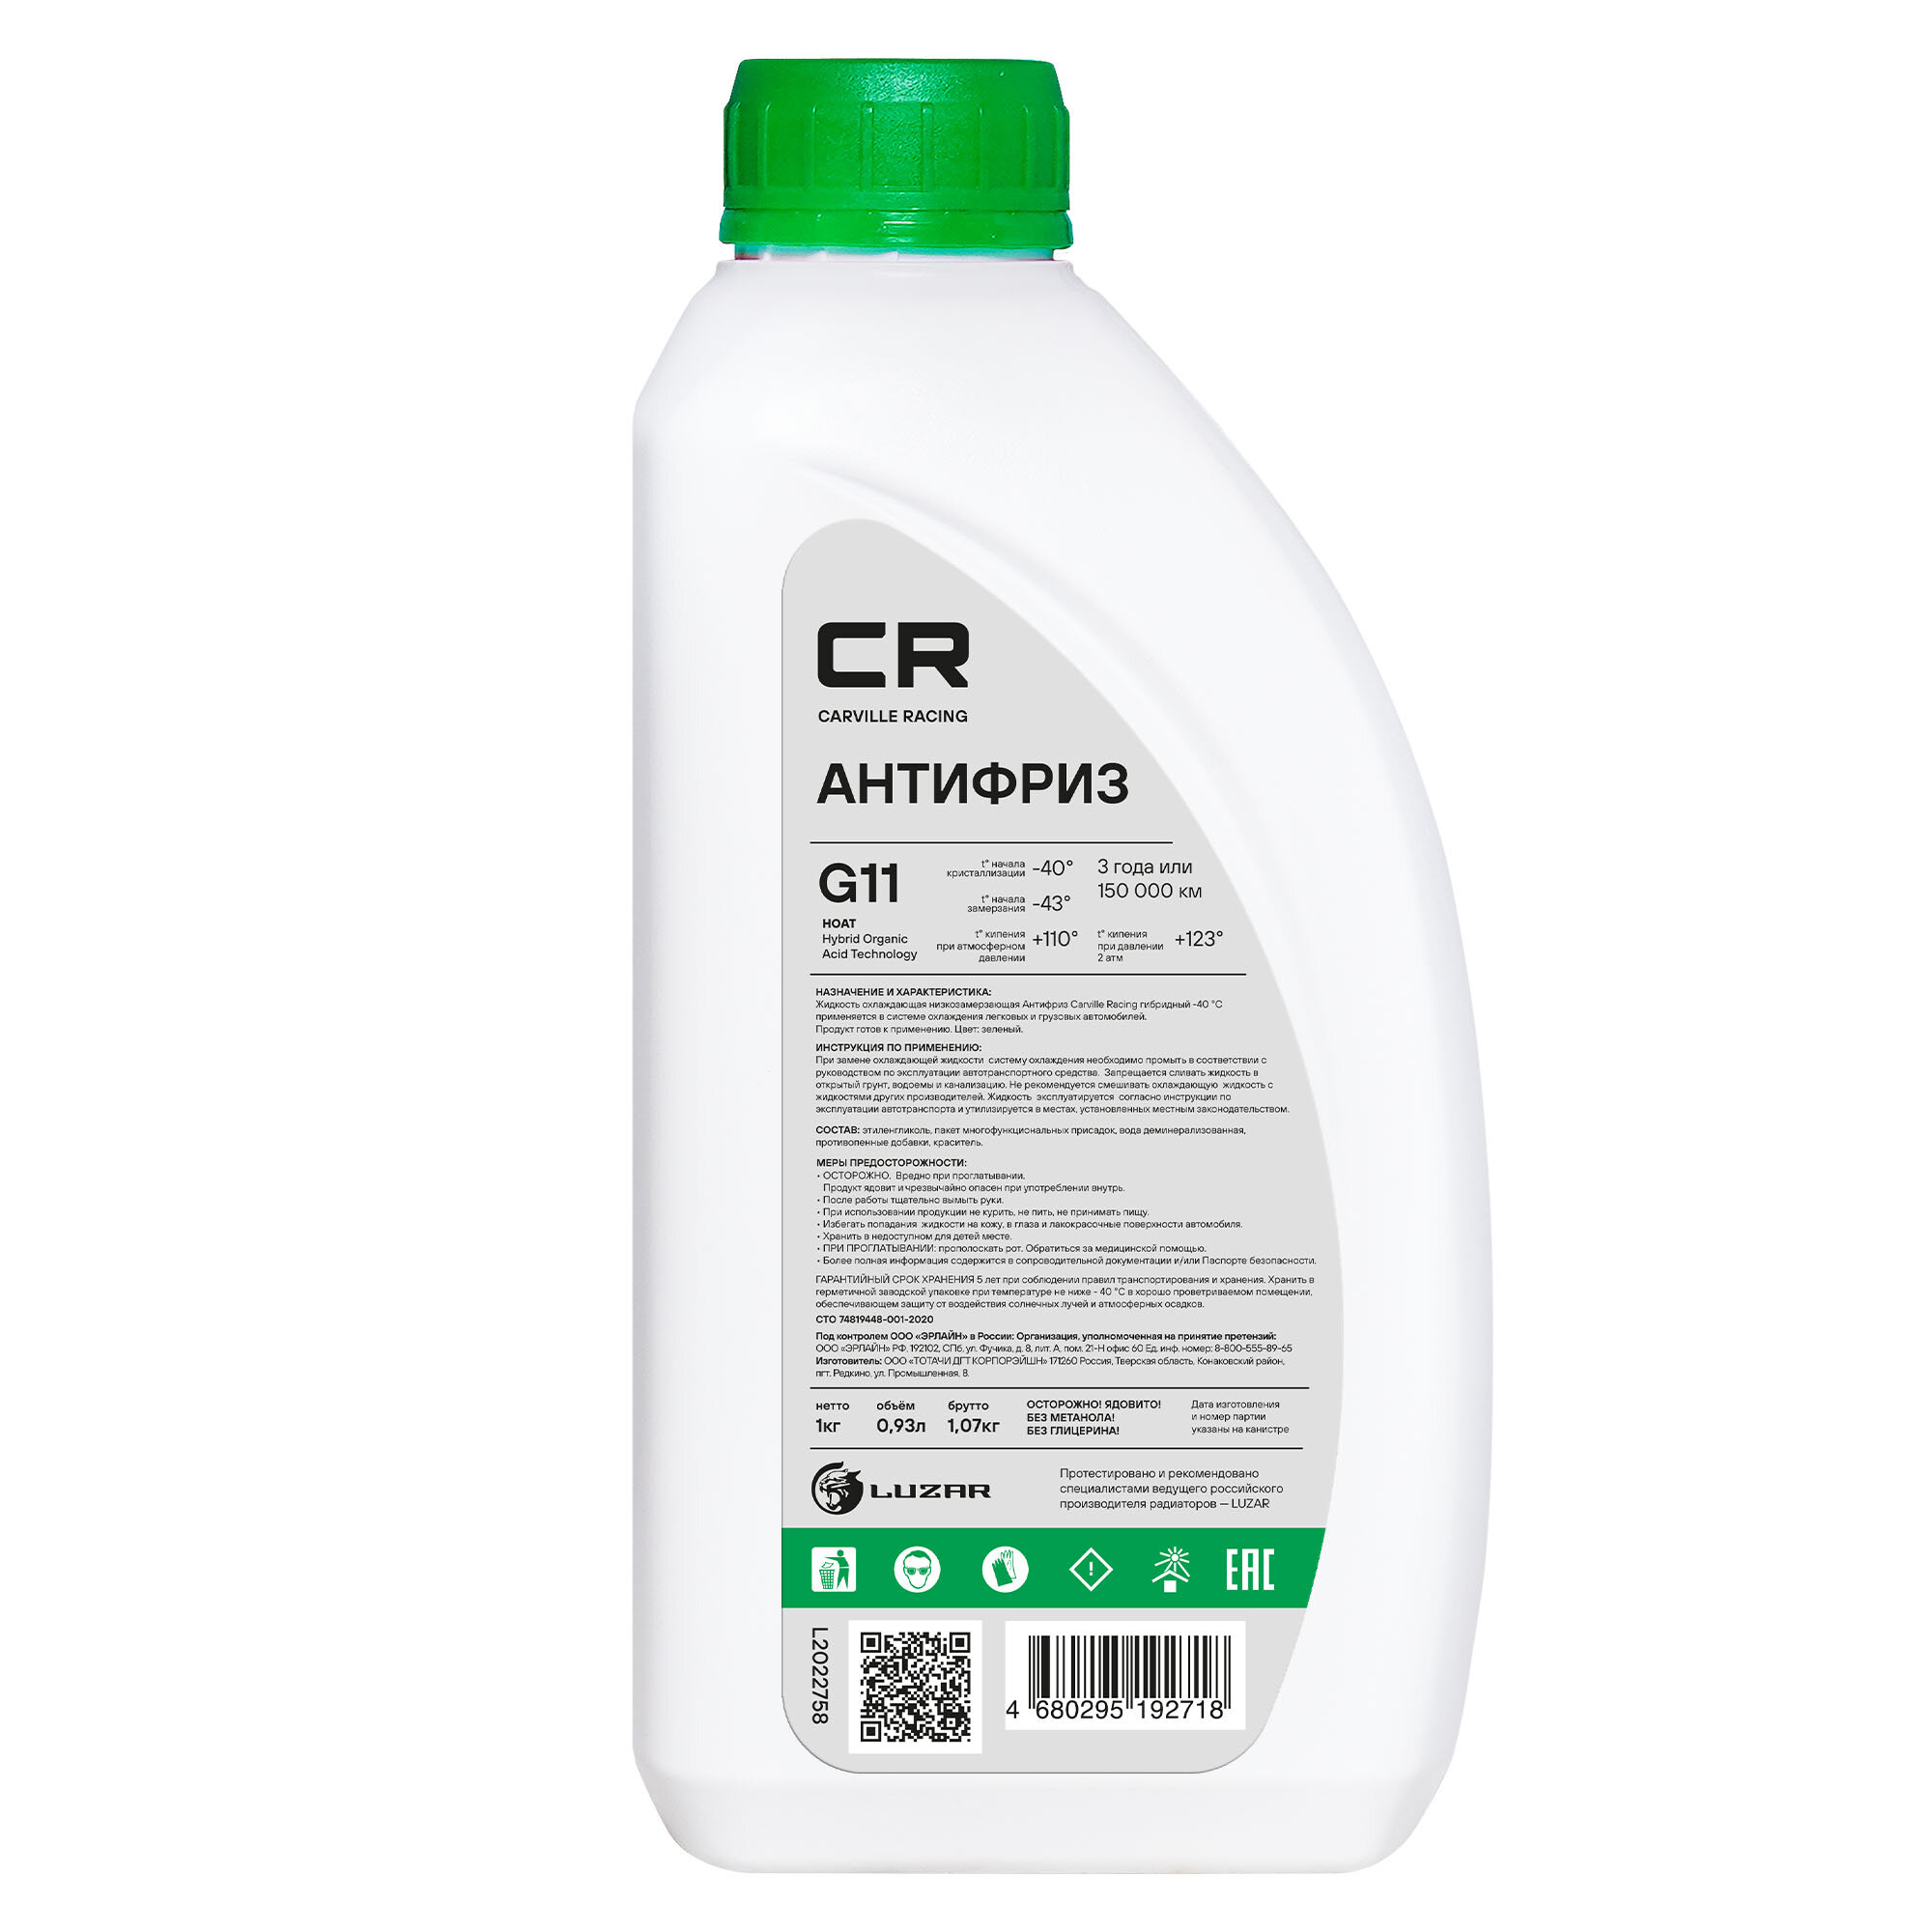 Антифриз CR зеленый, G11 1 кг